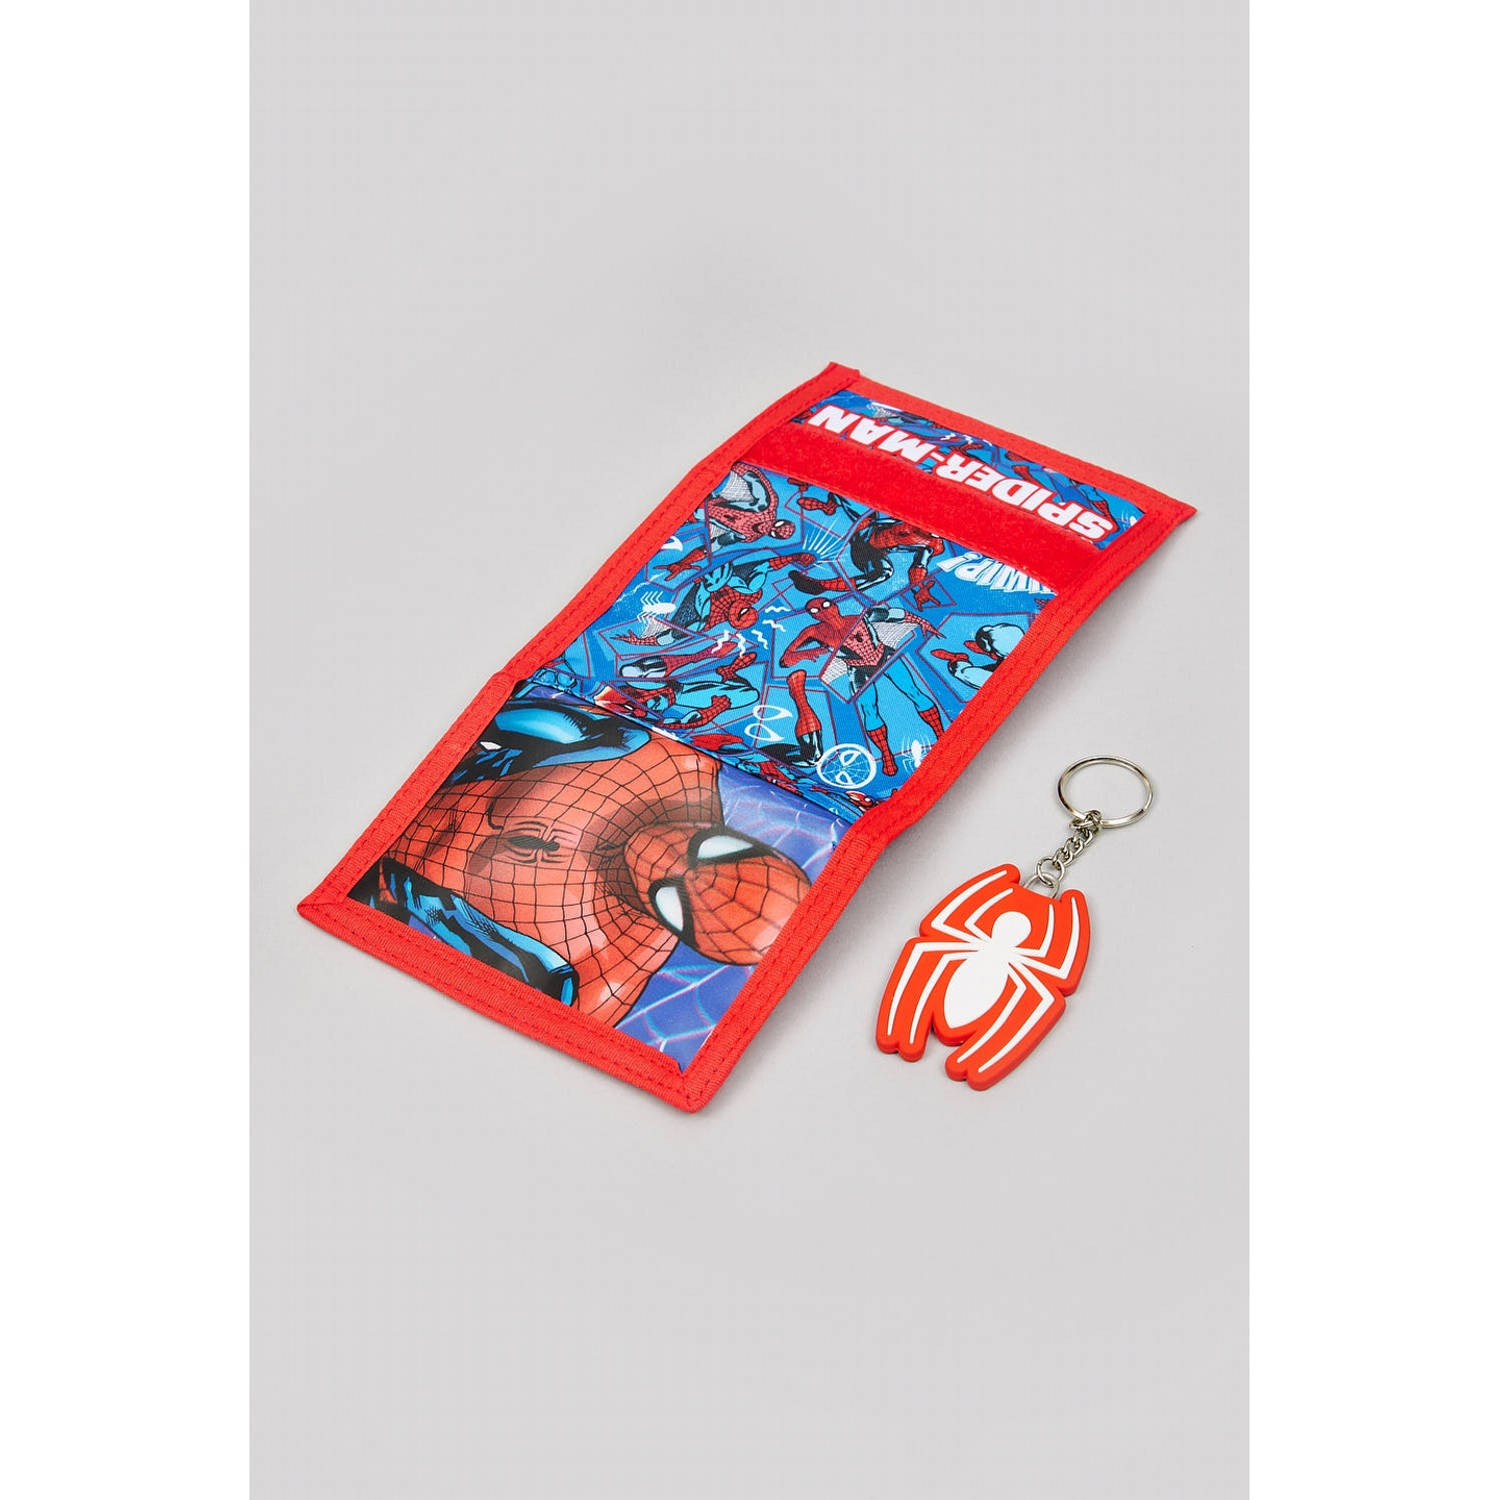 Spiderman portemonnee met gratis sleutelhanger